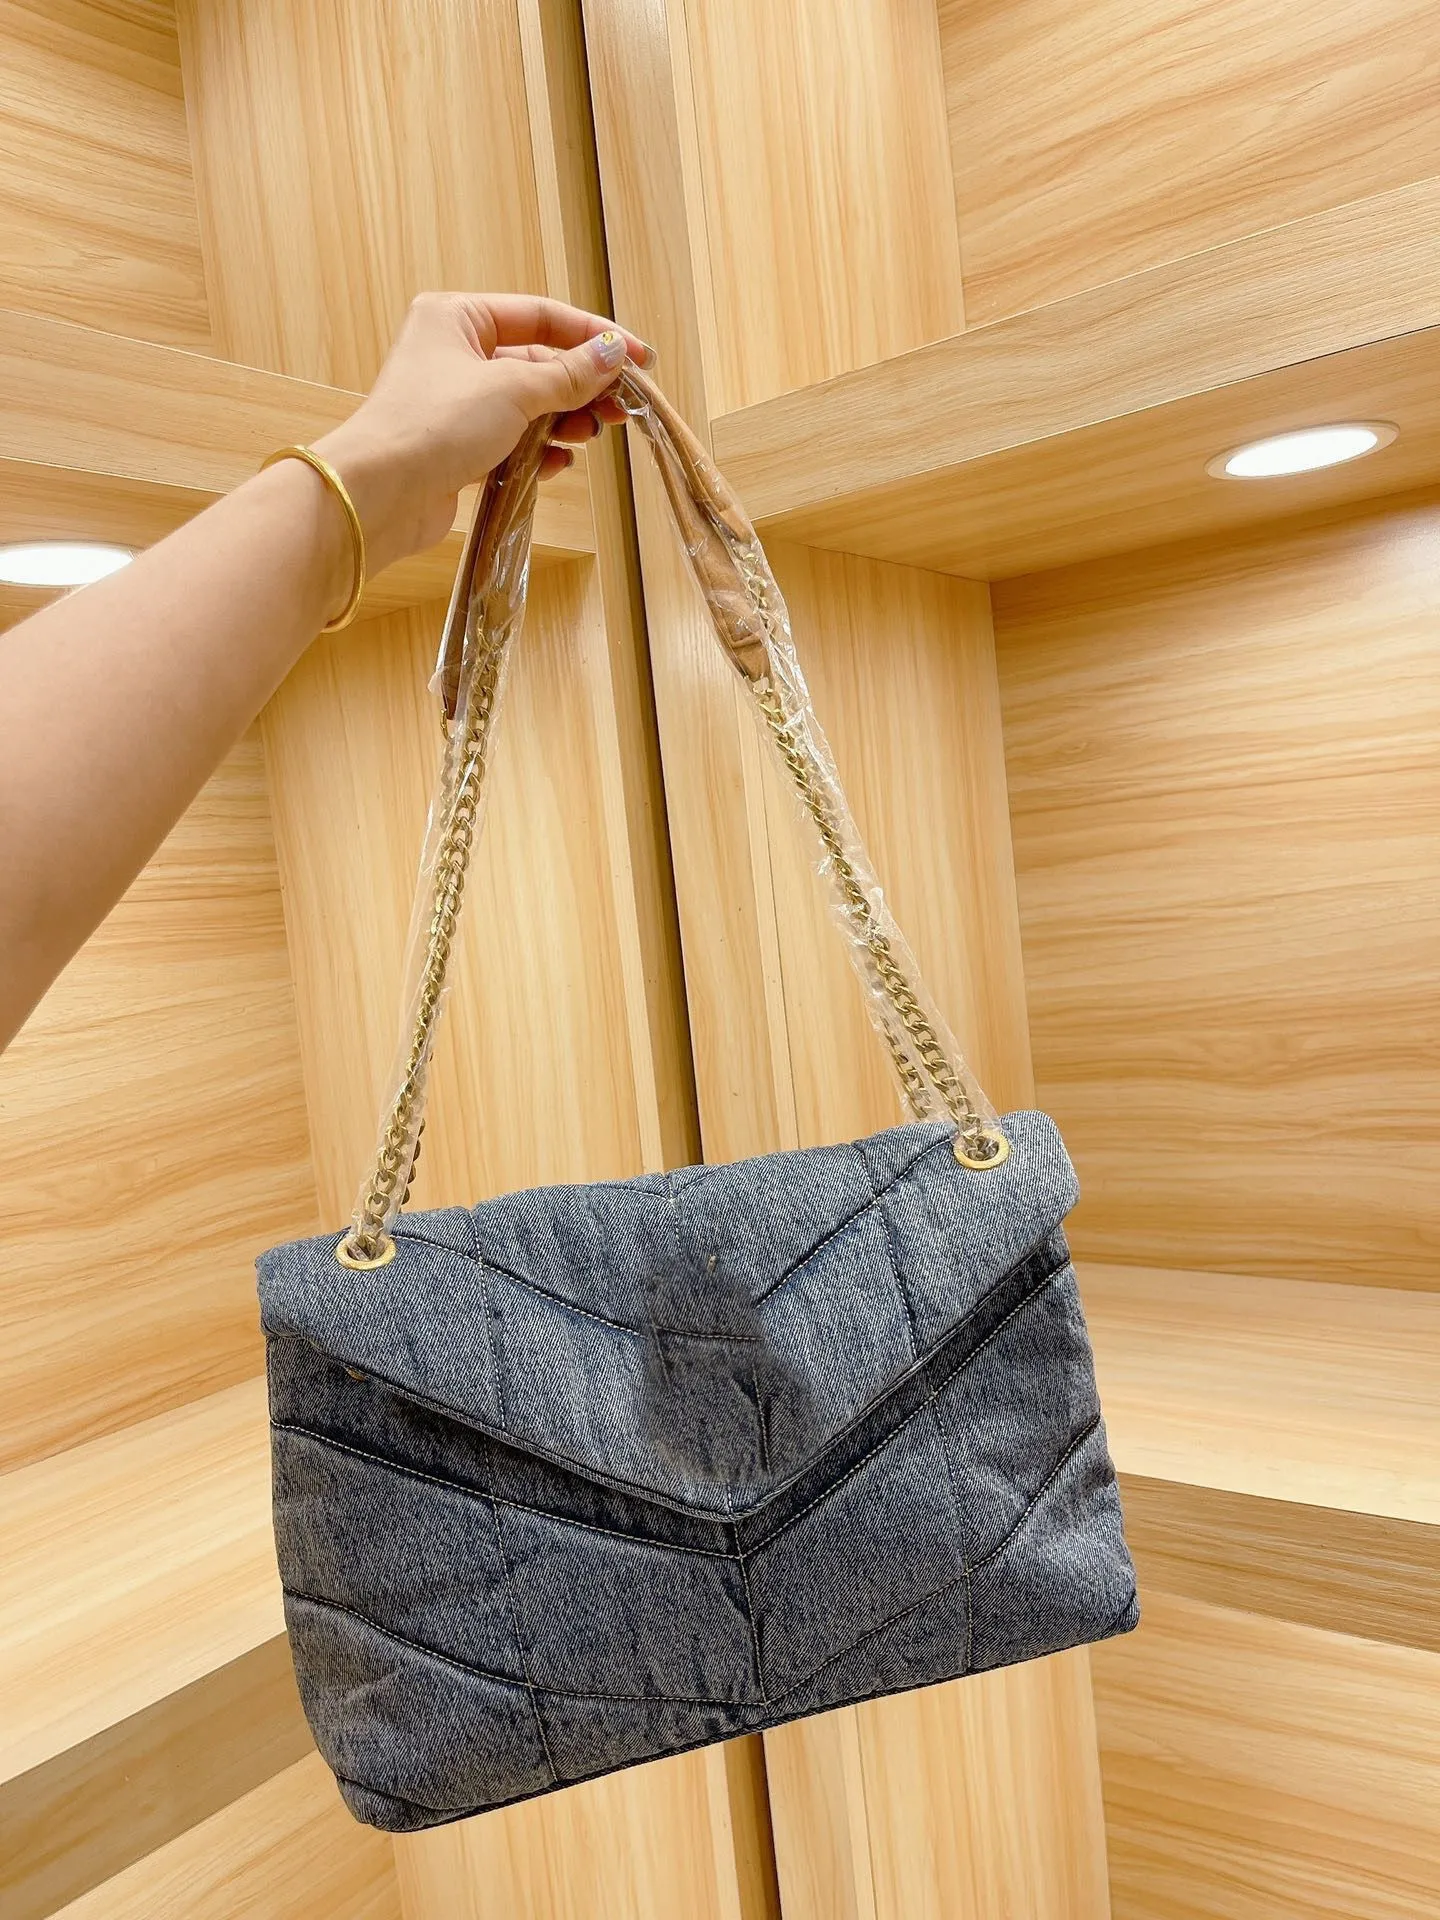 2021 Loulou Pufffer Denim Flap Bag Luxury Designer女性トートハンドバッグ財布曇りカウボーイショルダーバッグクロスボディクラッチゴールドチェーン財布fashionbag_s